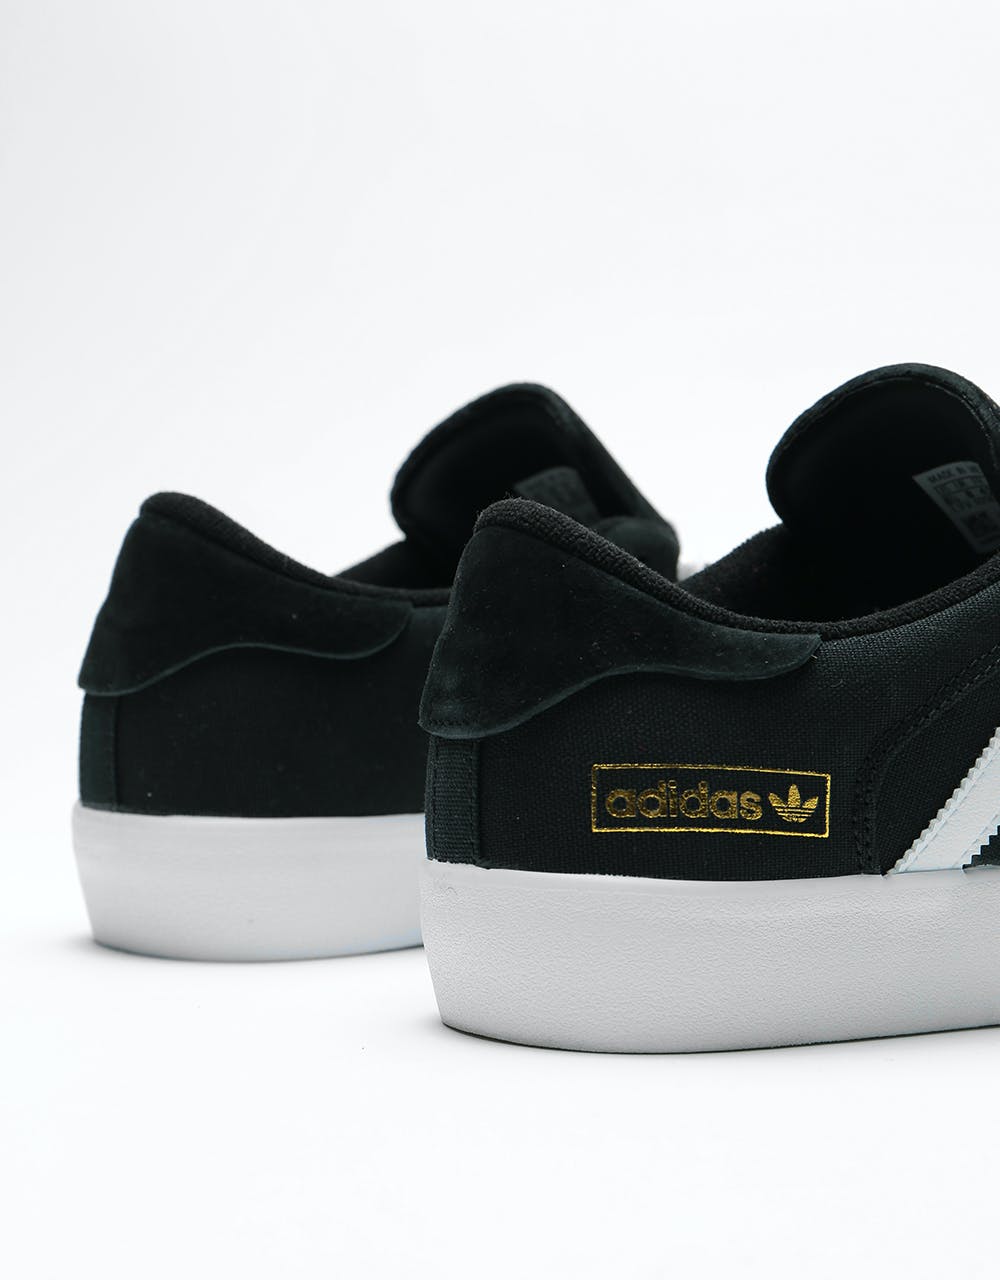 Adidas Matchbreak Super Skate Shoes - Core Black/White/Gold Metallic